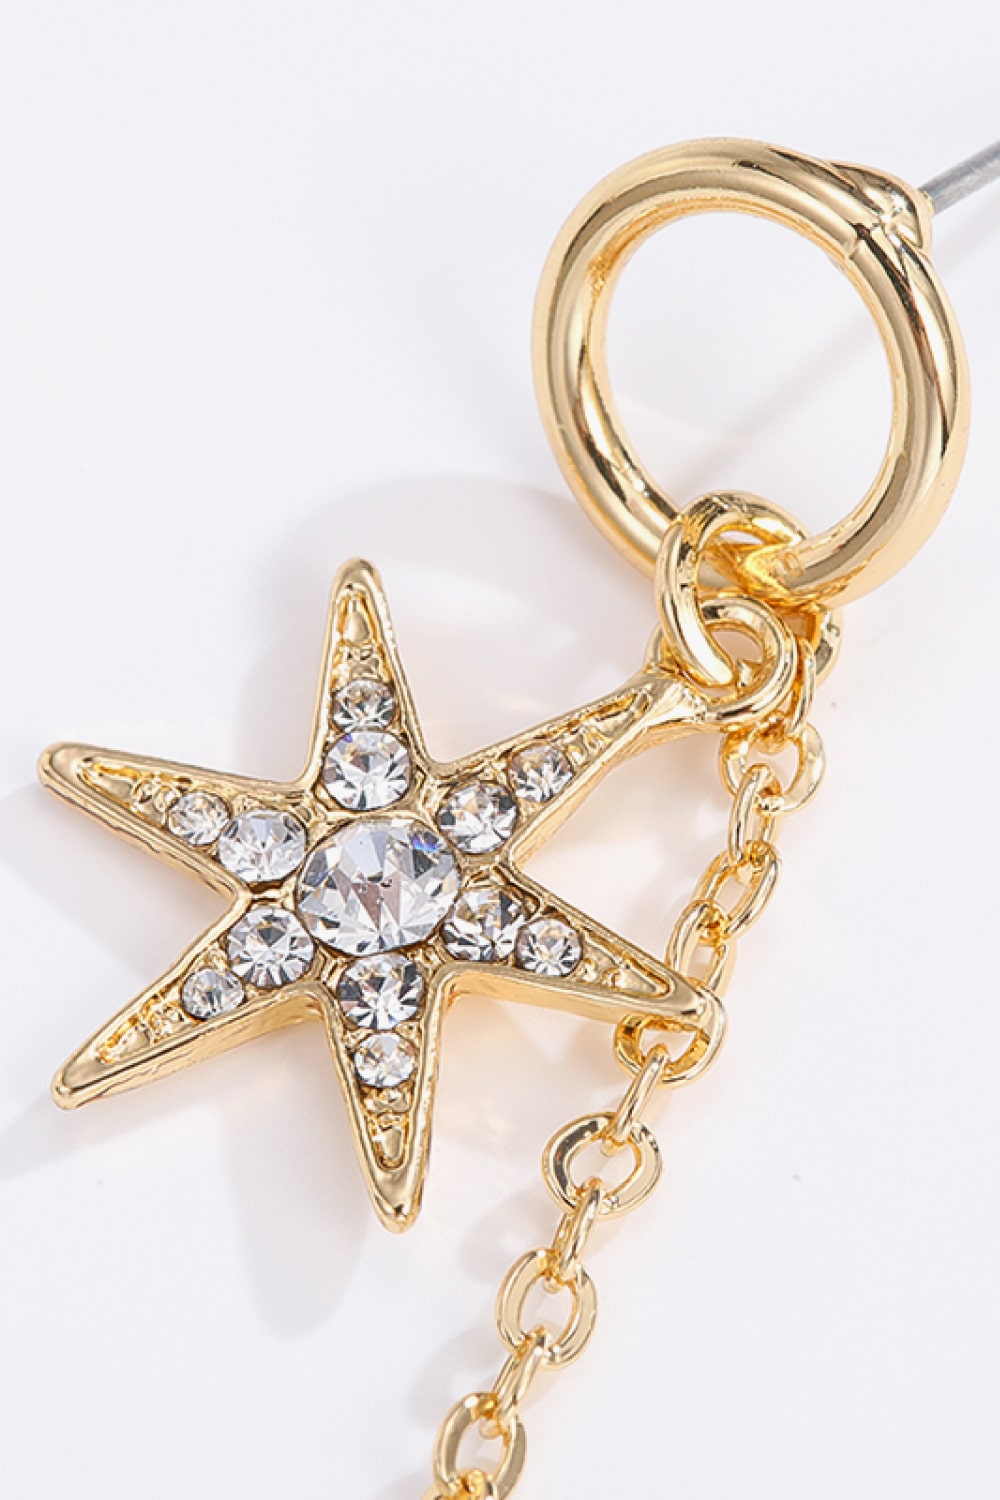 Inlaid Rhinestone Star and Moon Drop Earrings - BellaKat & Co.